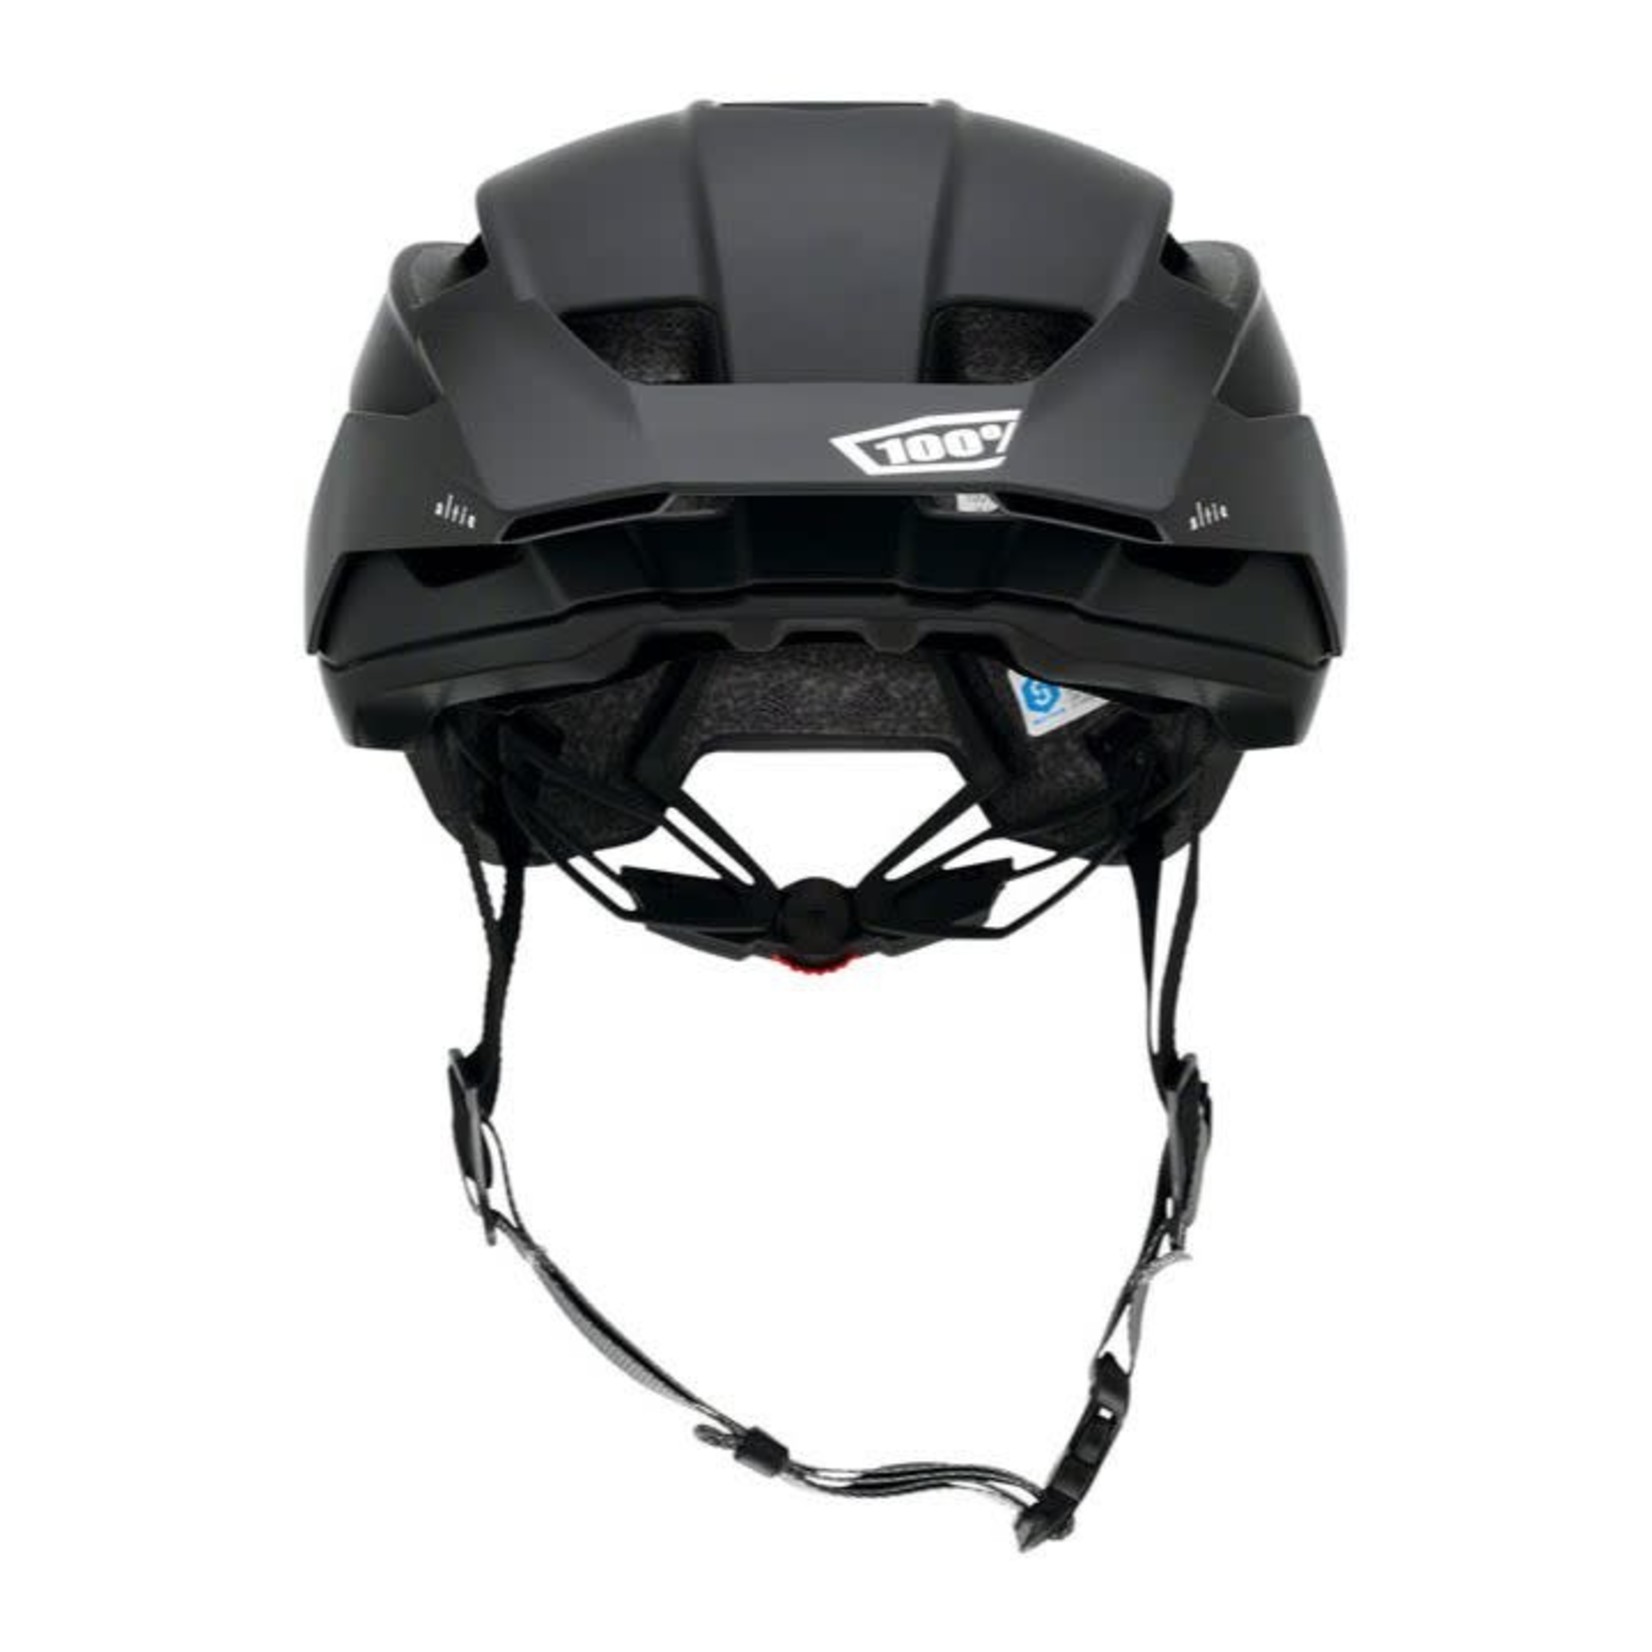 100 Percent 100% Altis Helmet - Black, Small/Medium